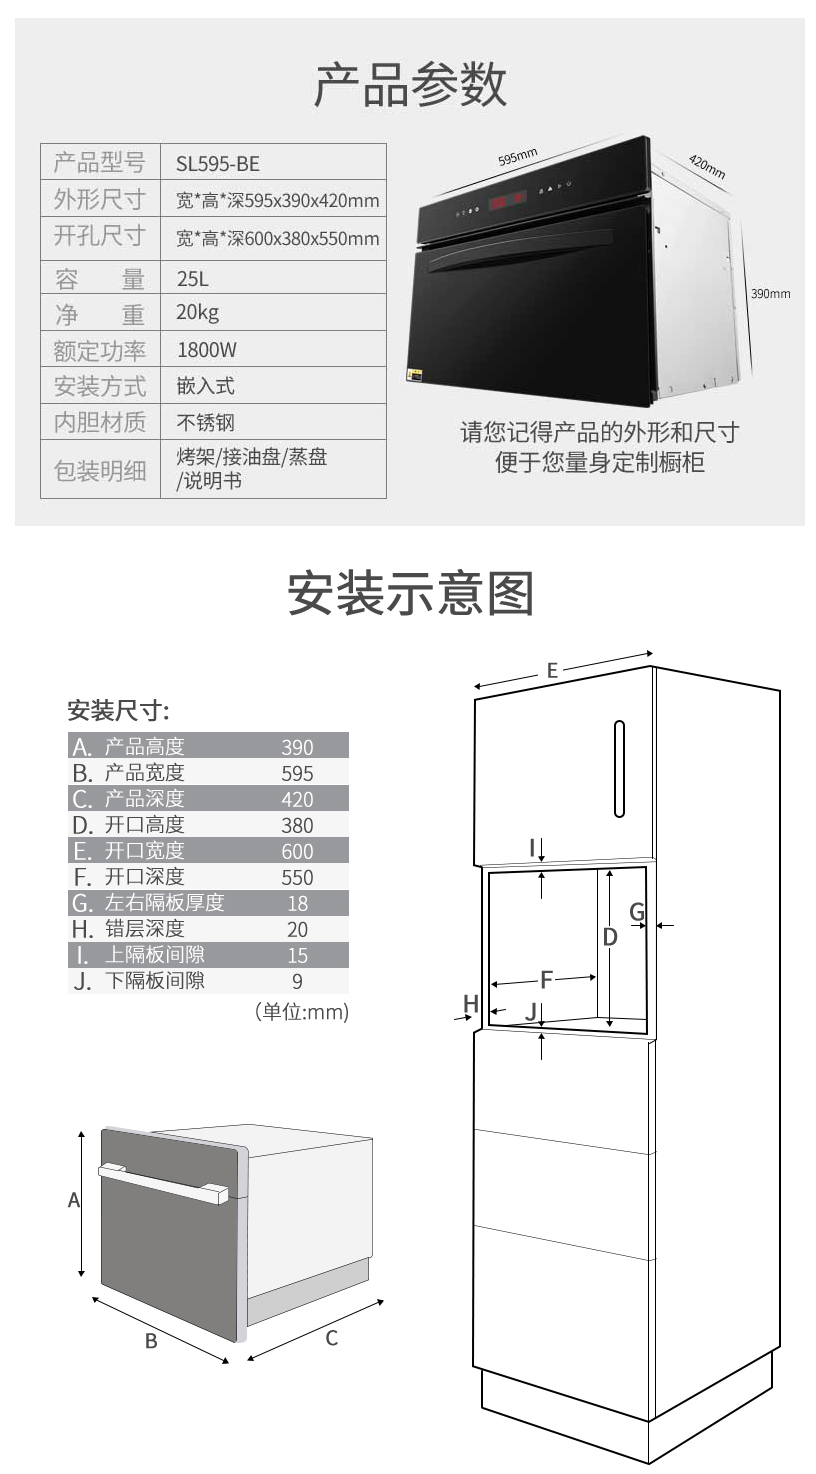 2.SL595-BE-+-HF595电烤箱.jpg